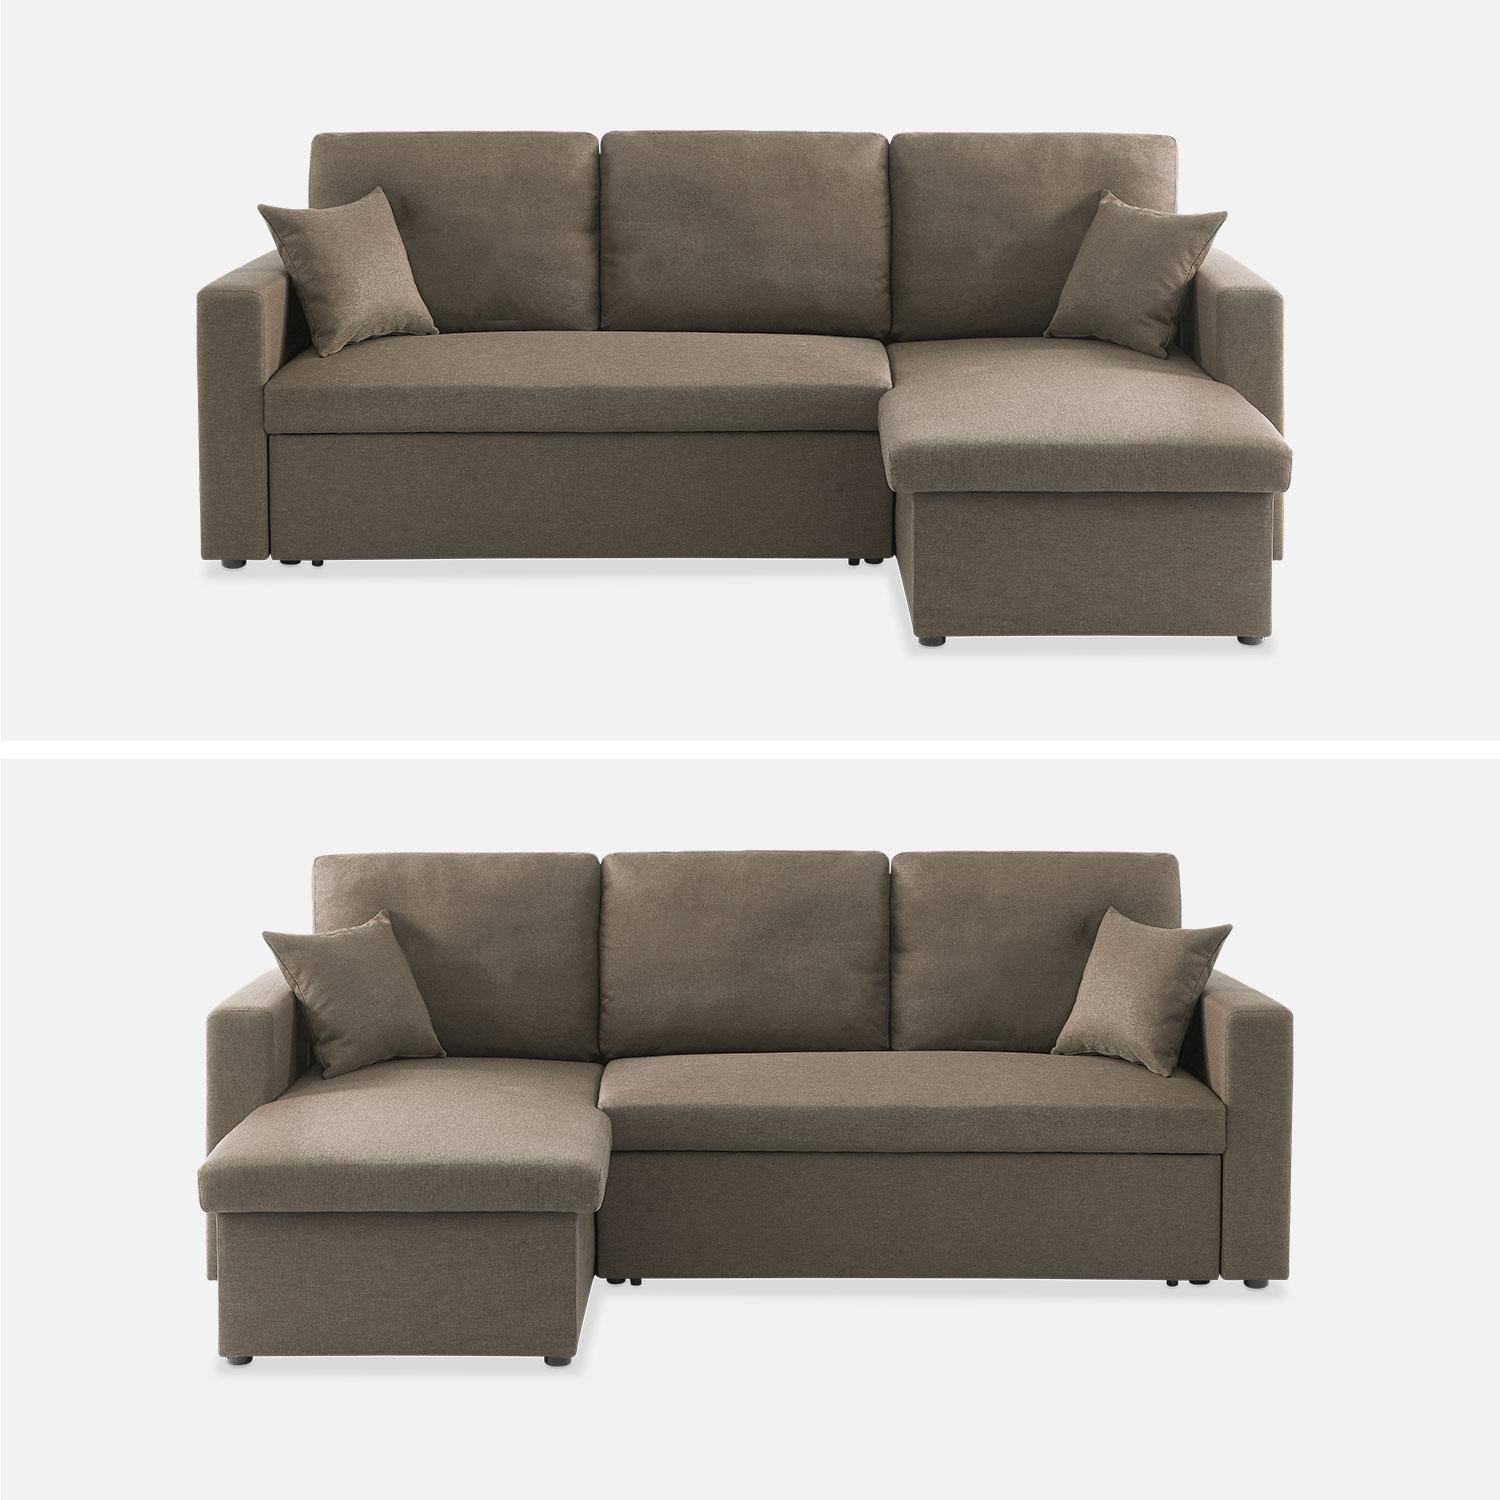 3-seater reversible brown corner sofa bed with storage box, brown, L219xD81xH68cm, IDA Photo7